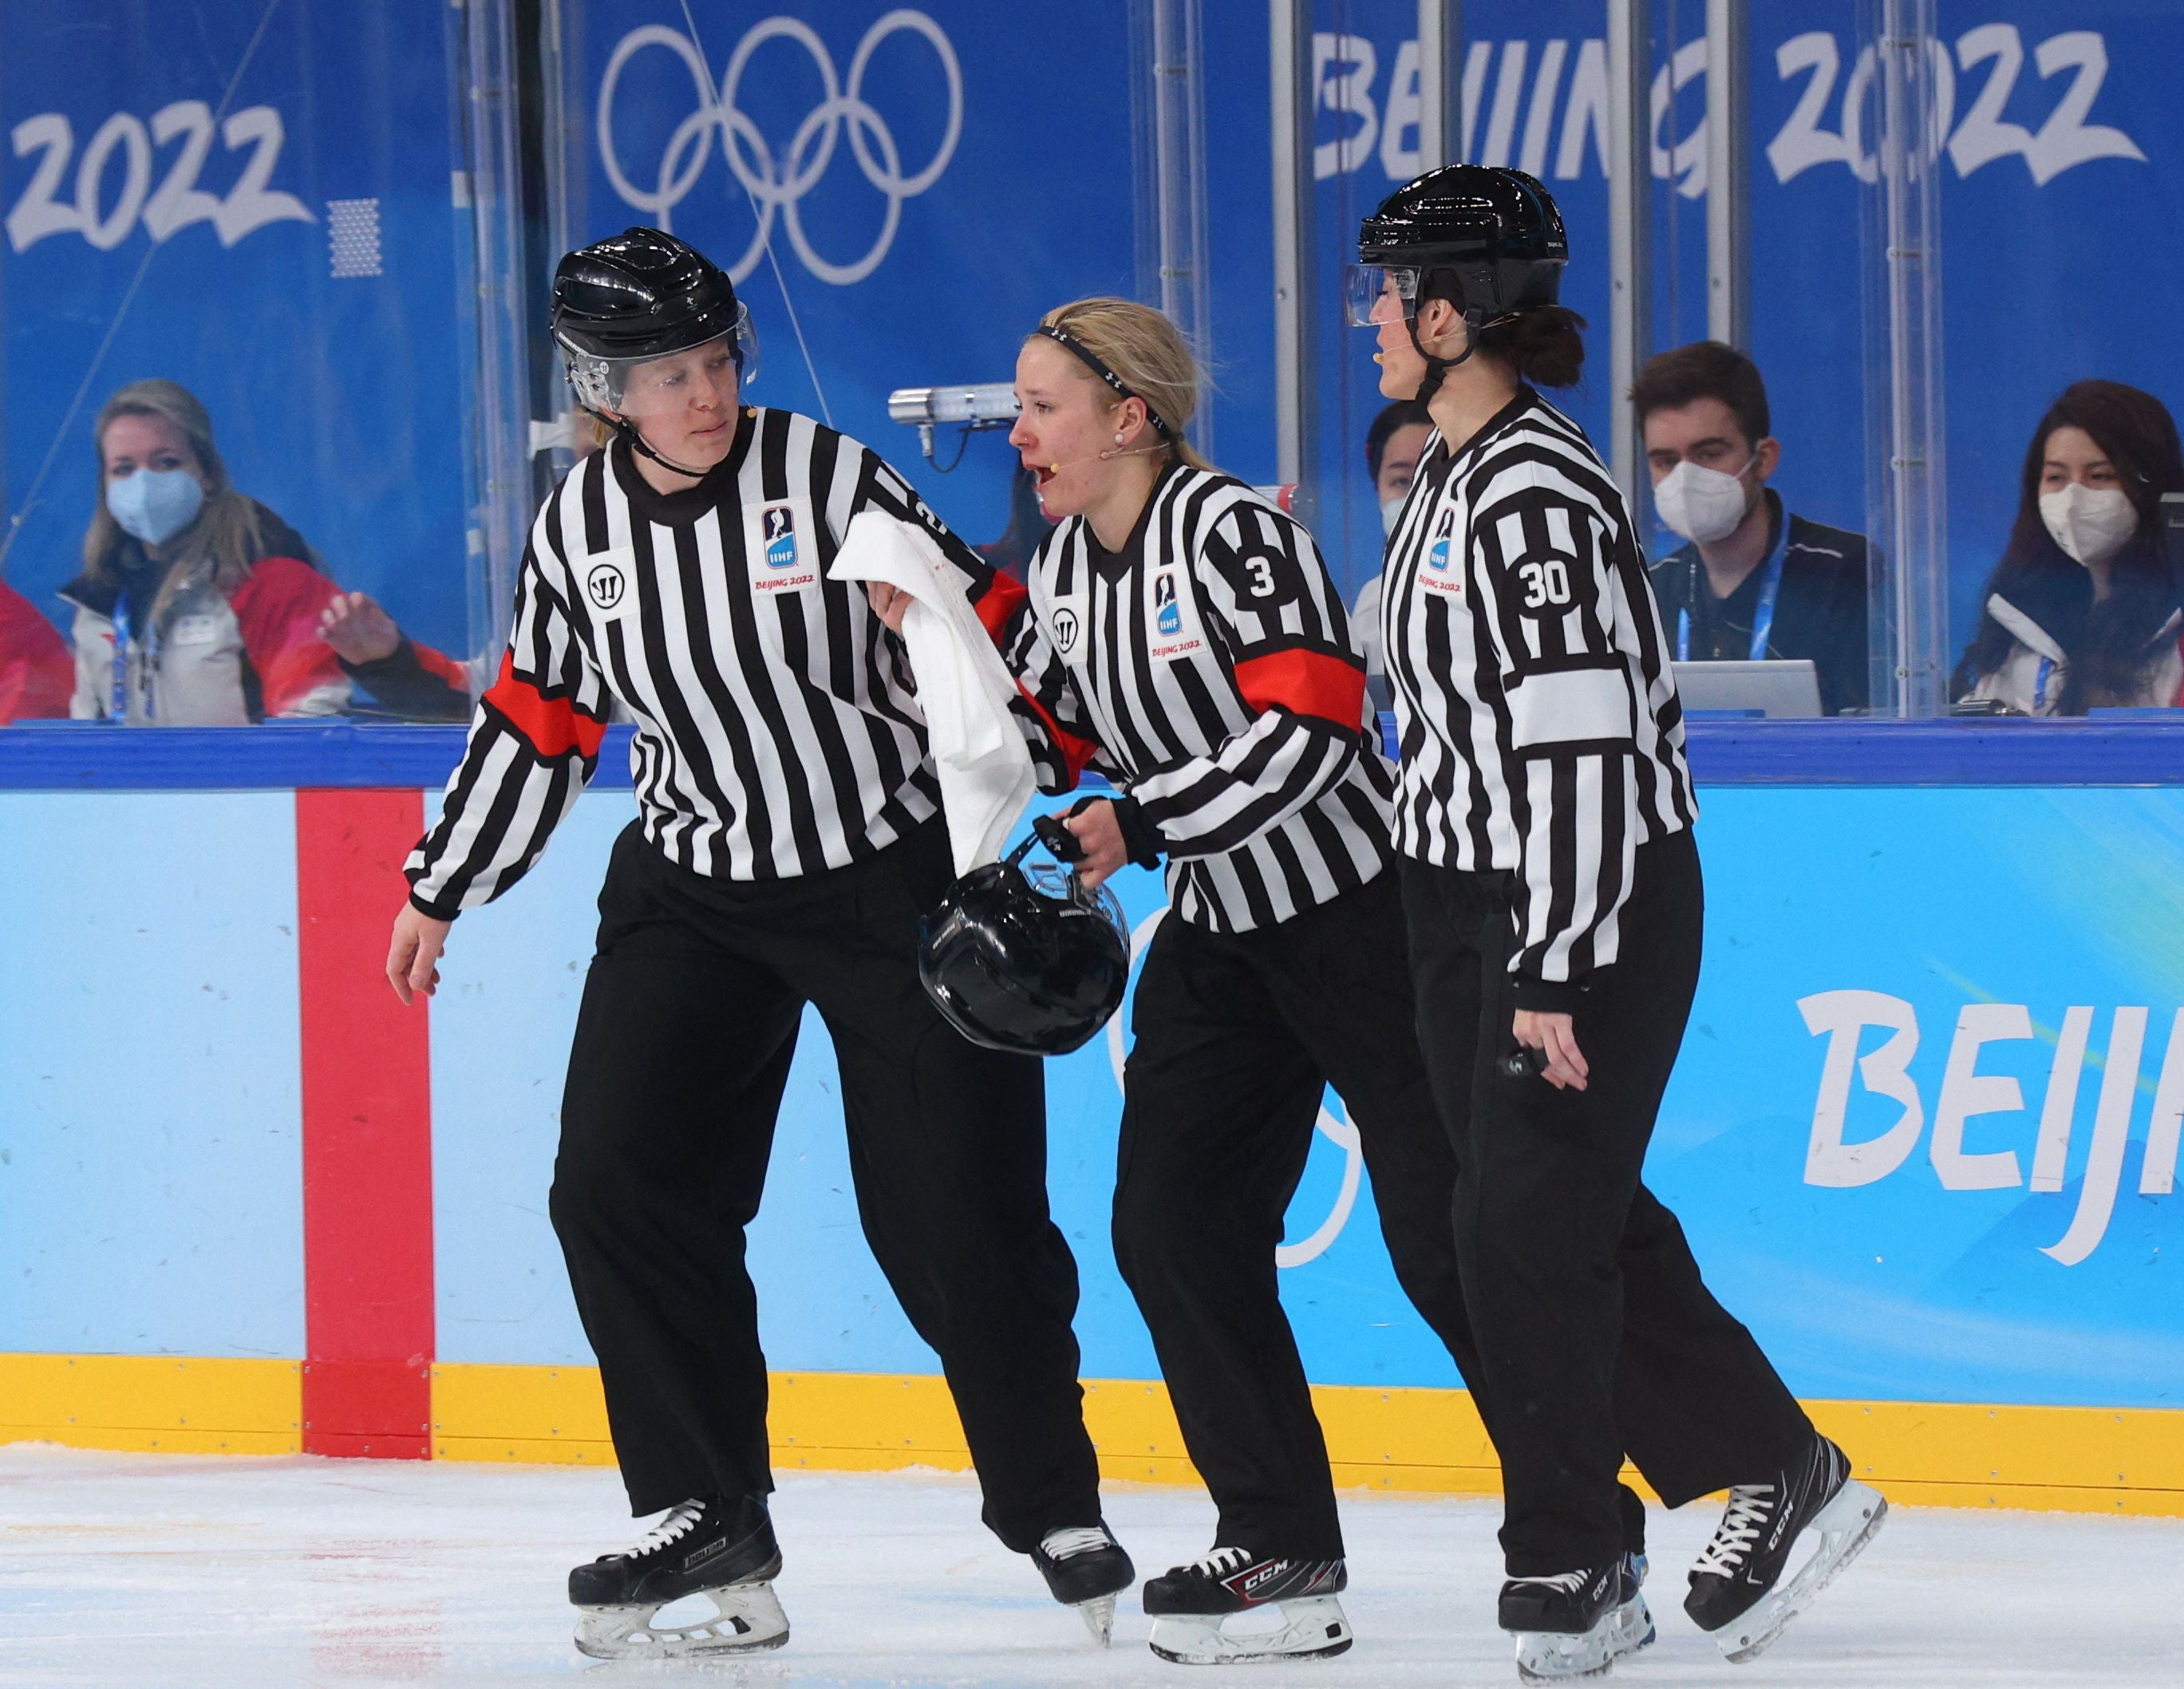 Referee Got Face Slashed During Winter Olympics Hockey Match